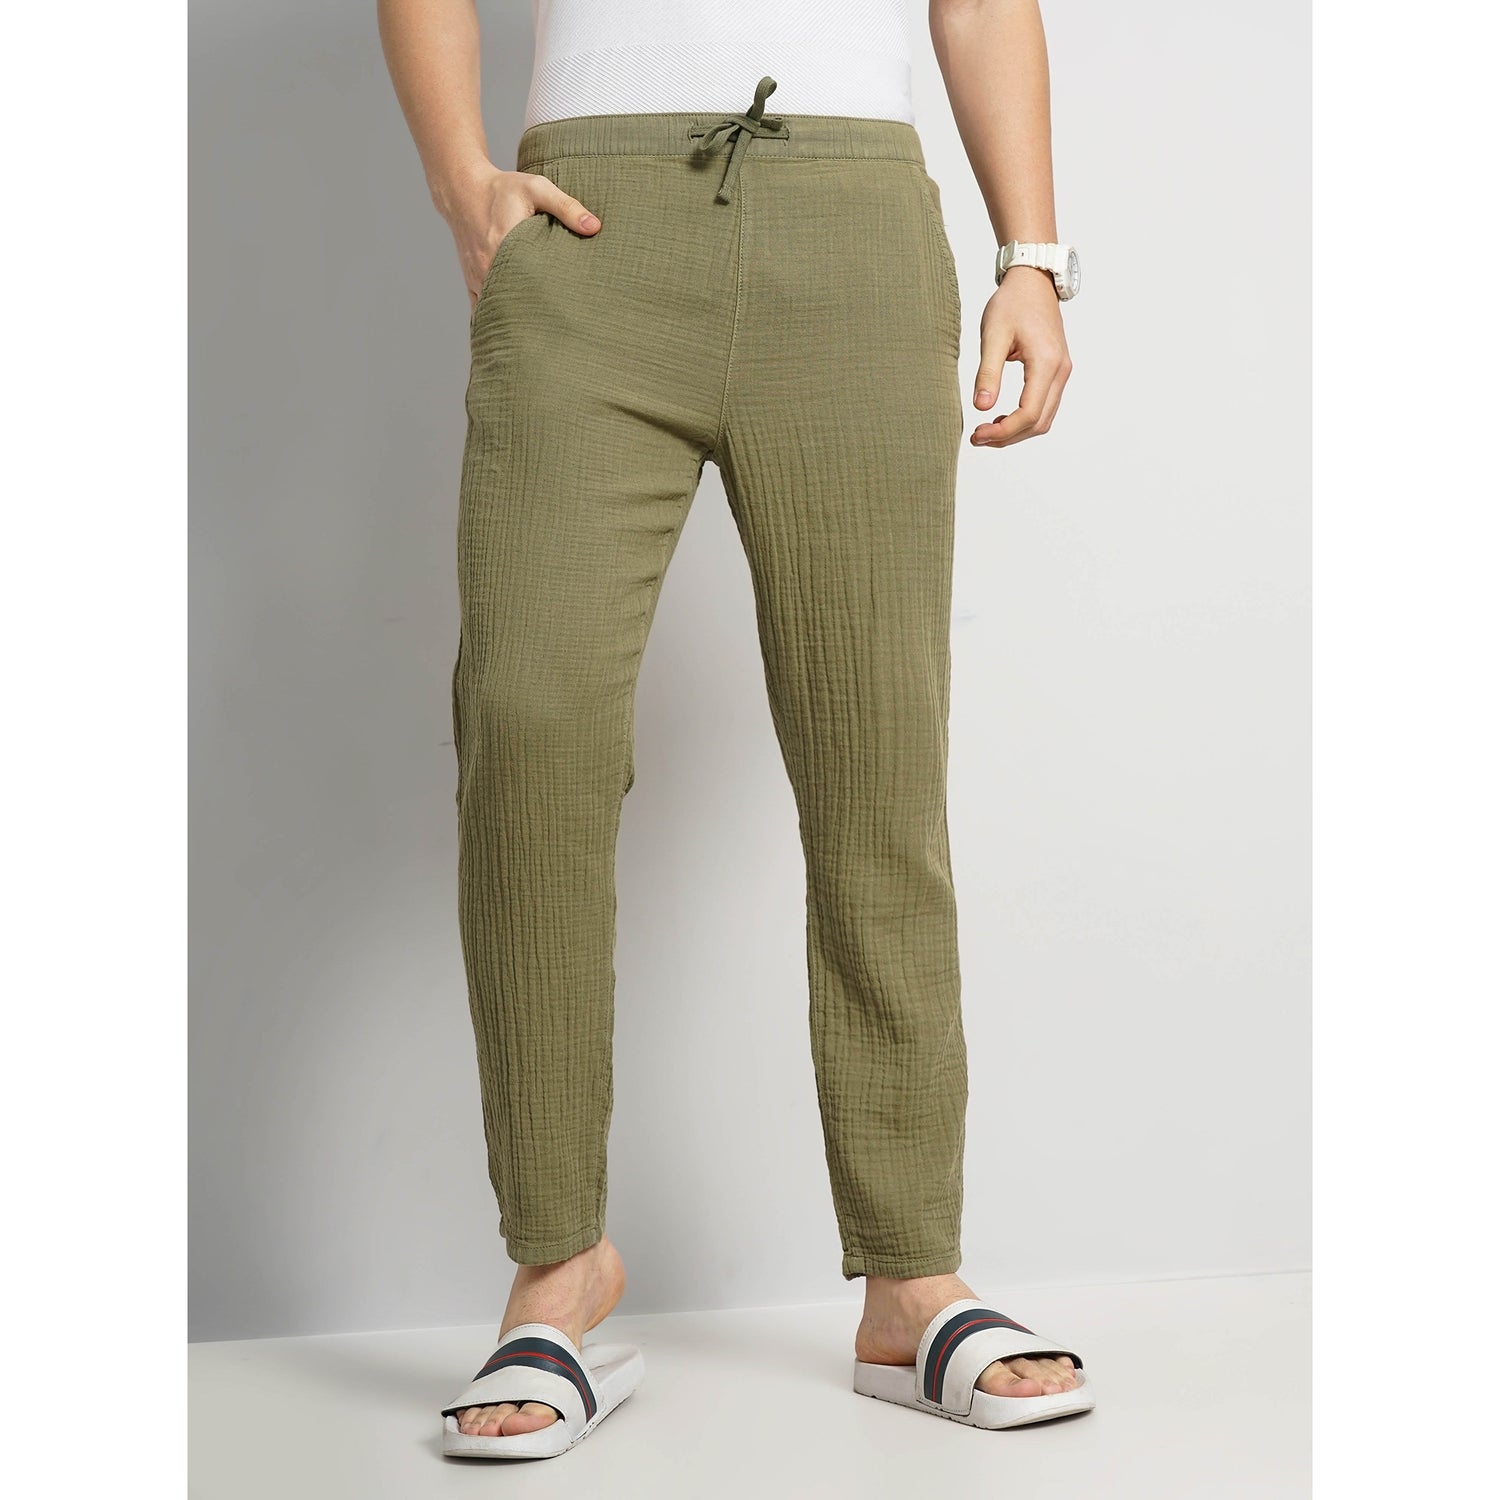 Men's Green Solid Regular Fit Cotton Fashion Trousers (GOBOGAZE)